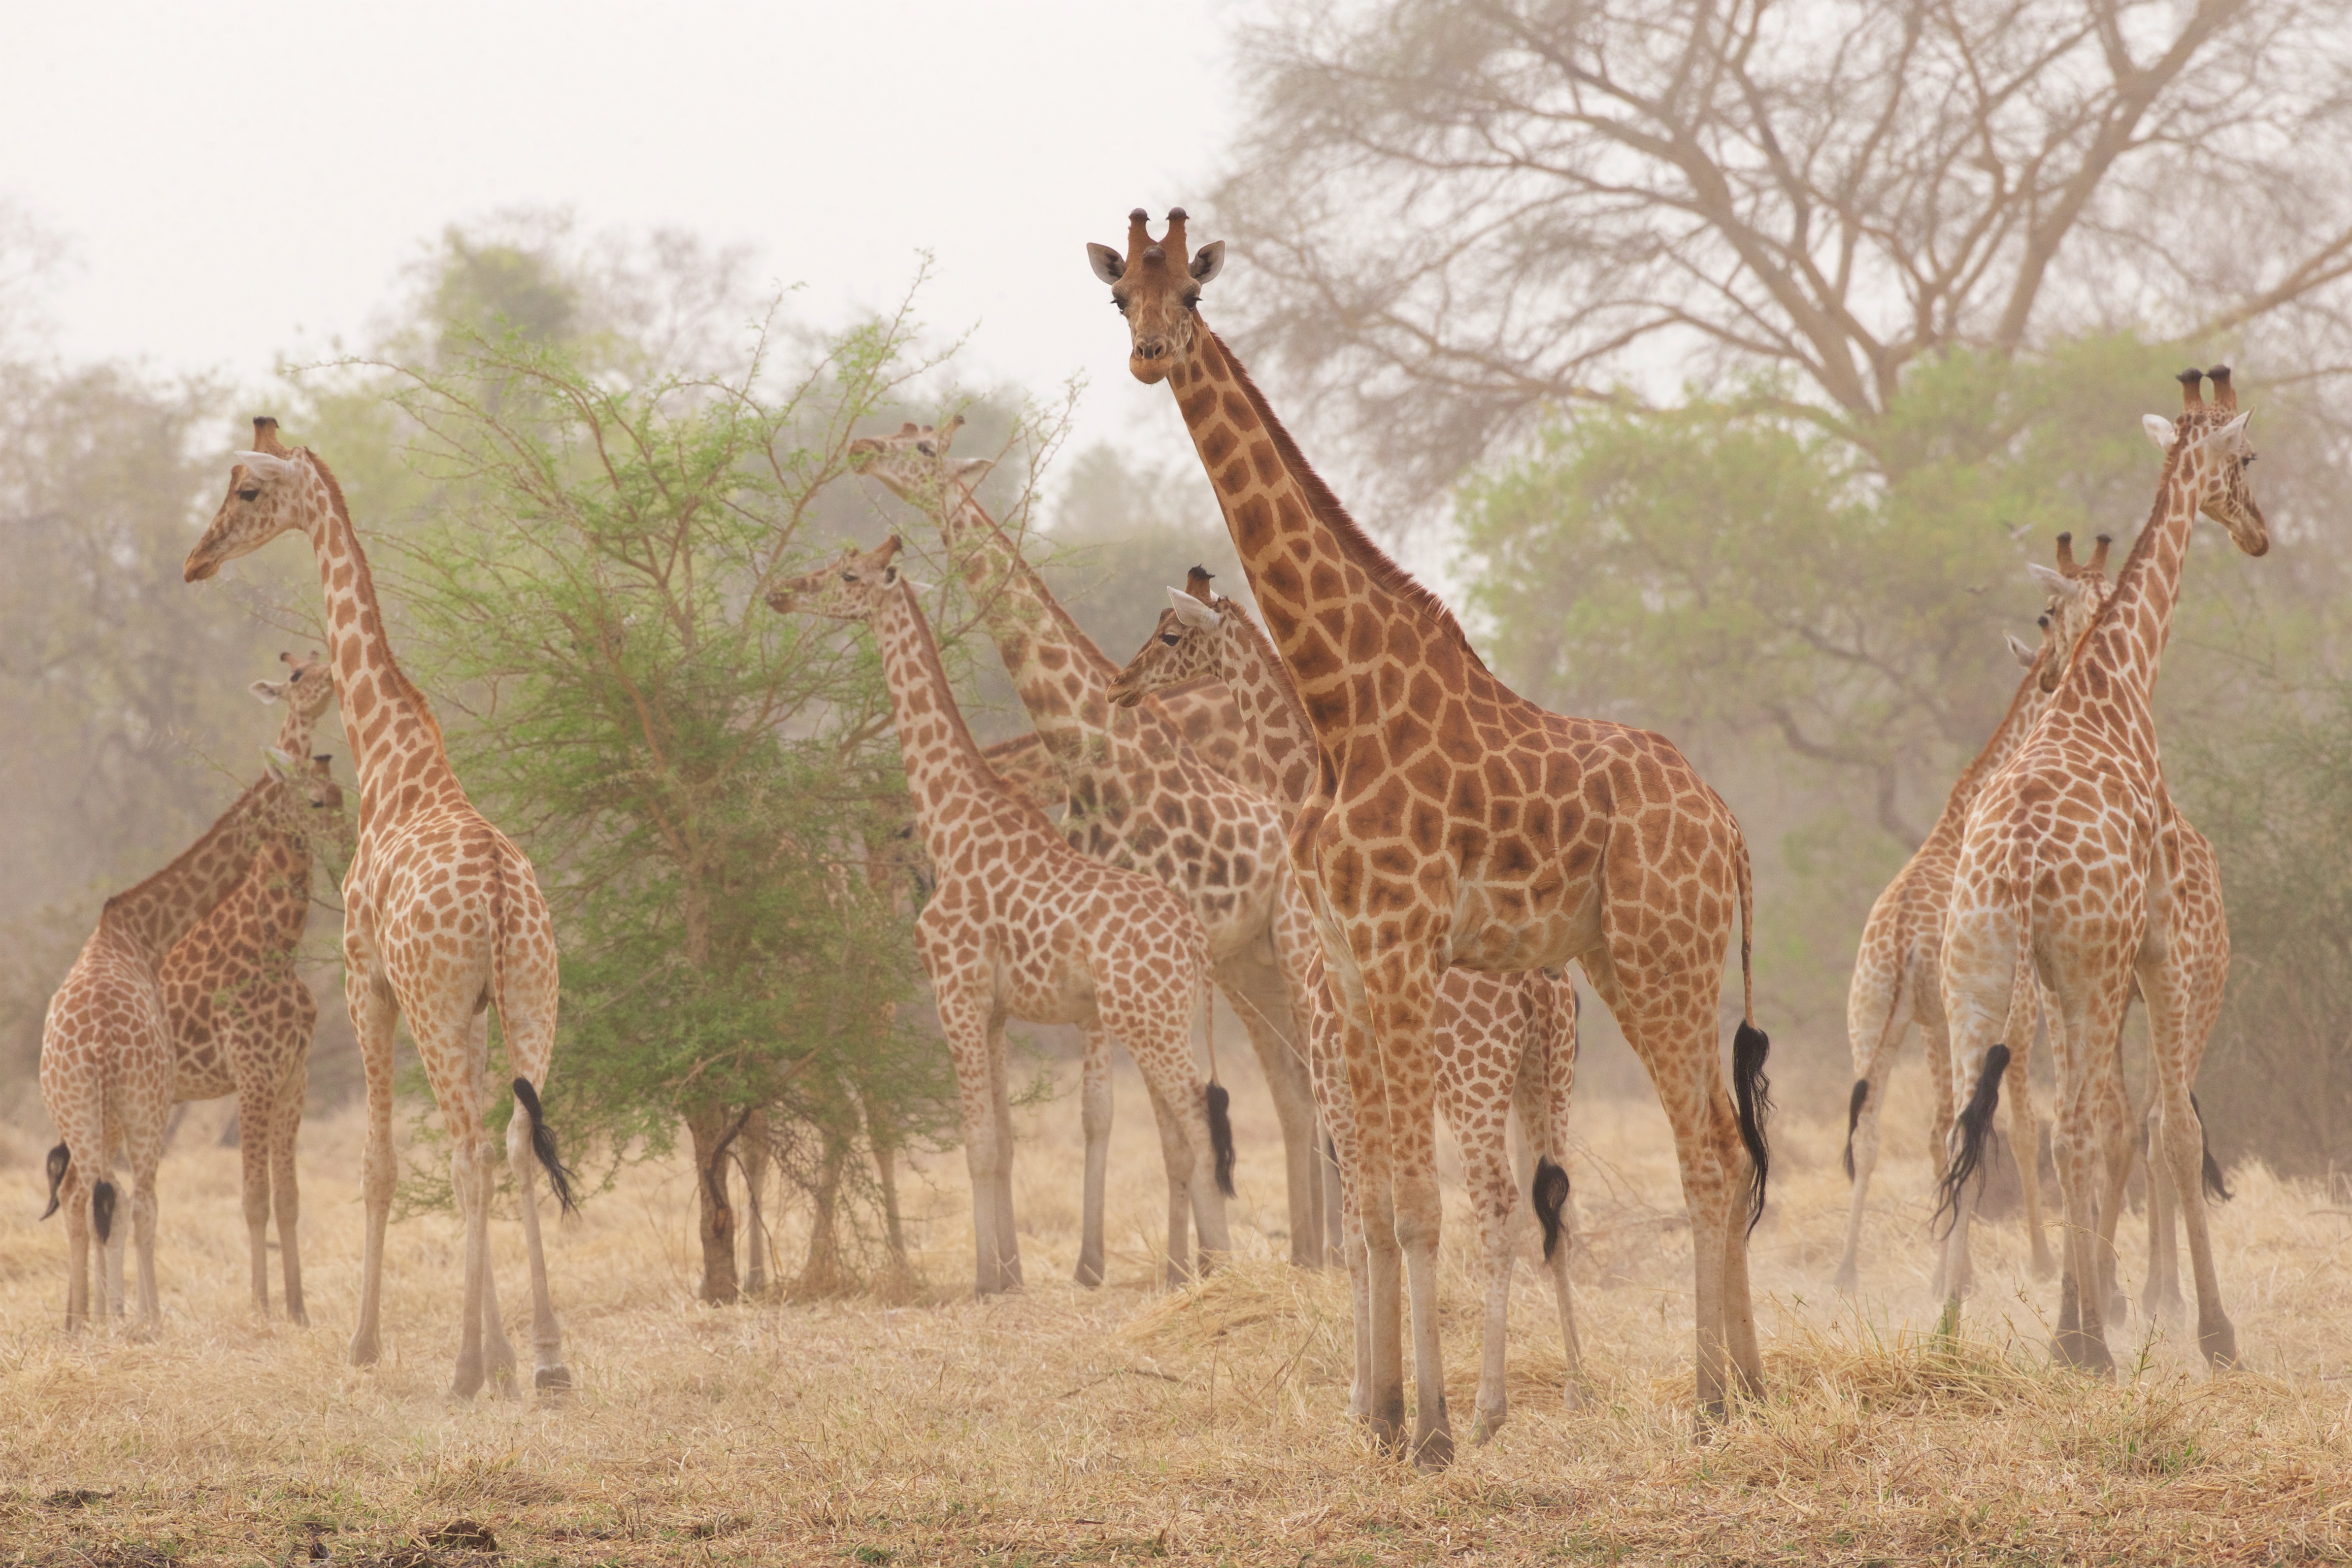 Kordofian giraffe; photo by Michael Lorentz